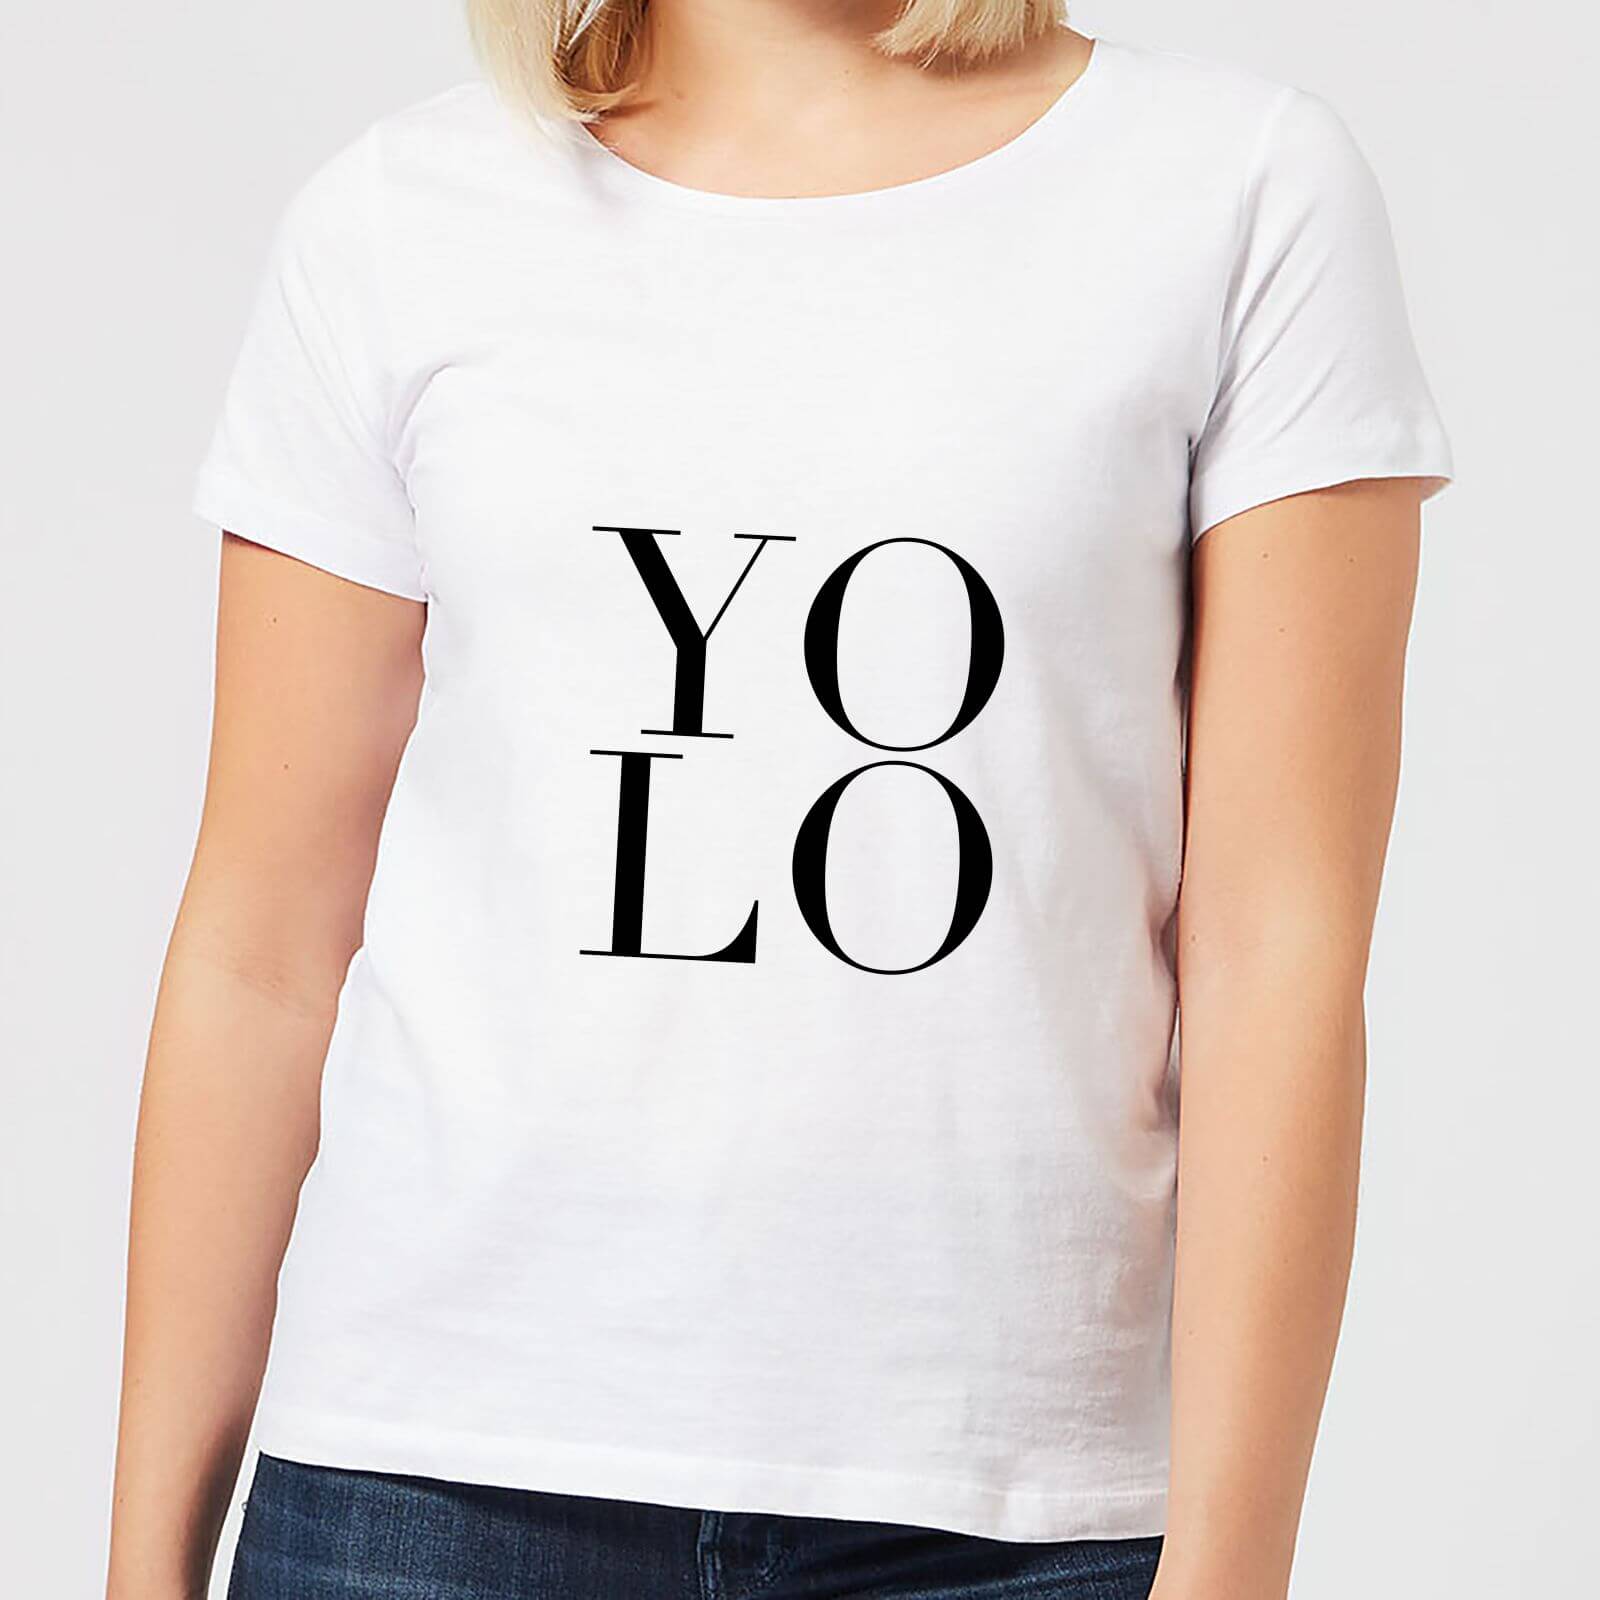 YOLO Women's T-Shirt - White - S - White